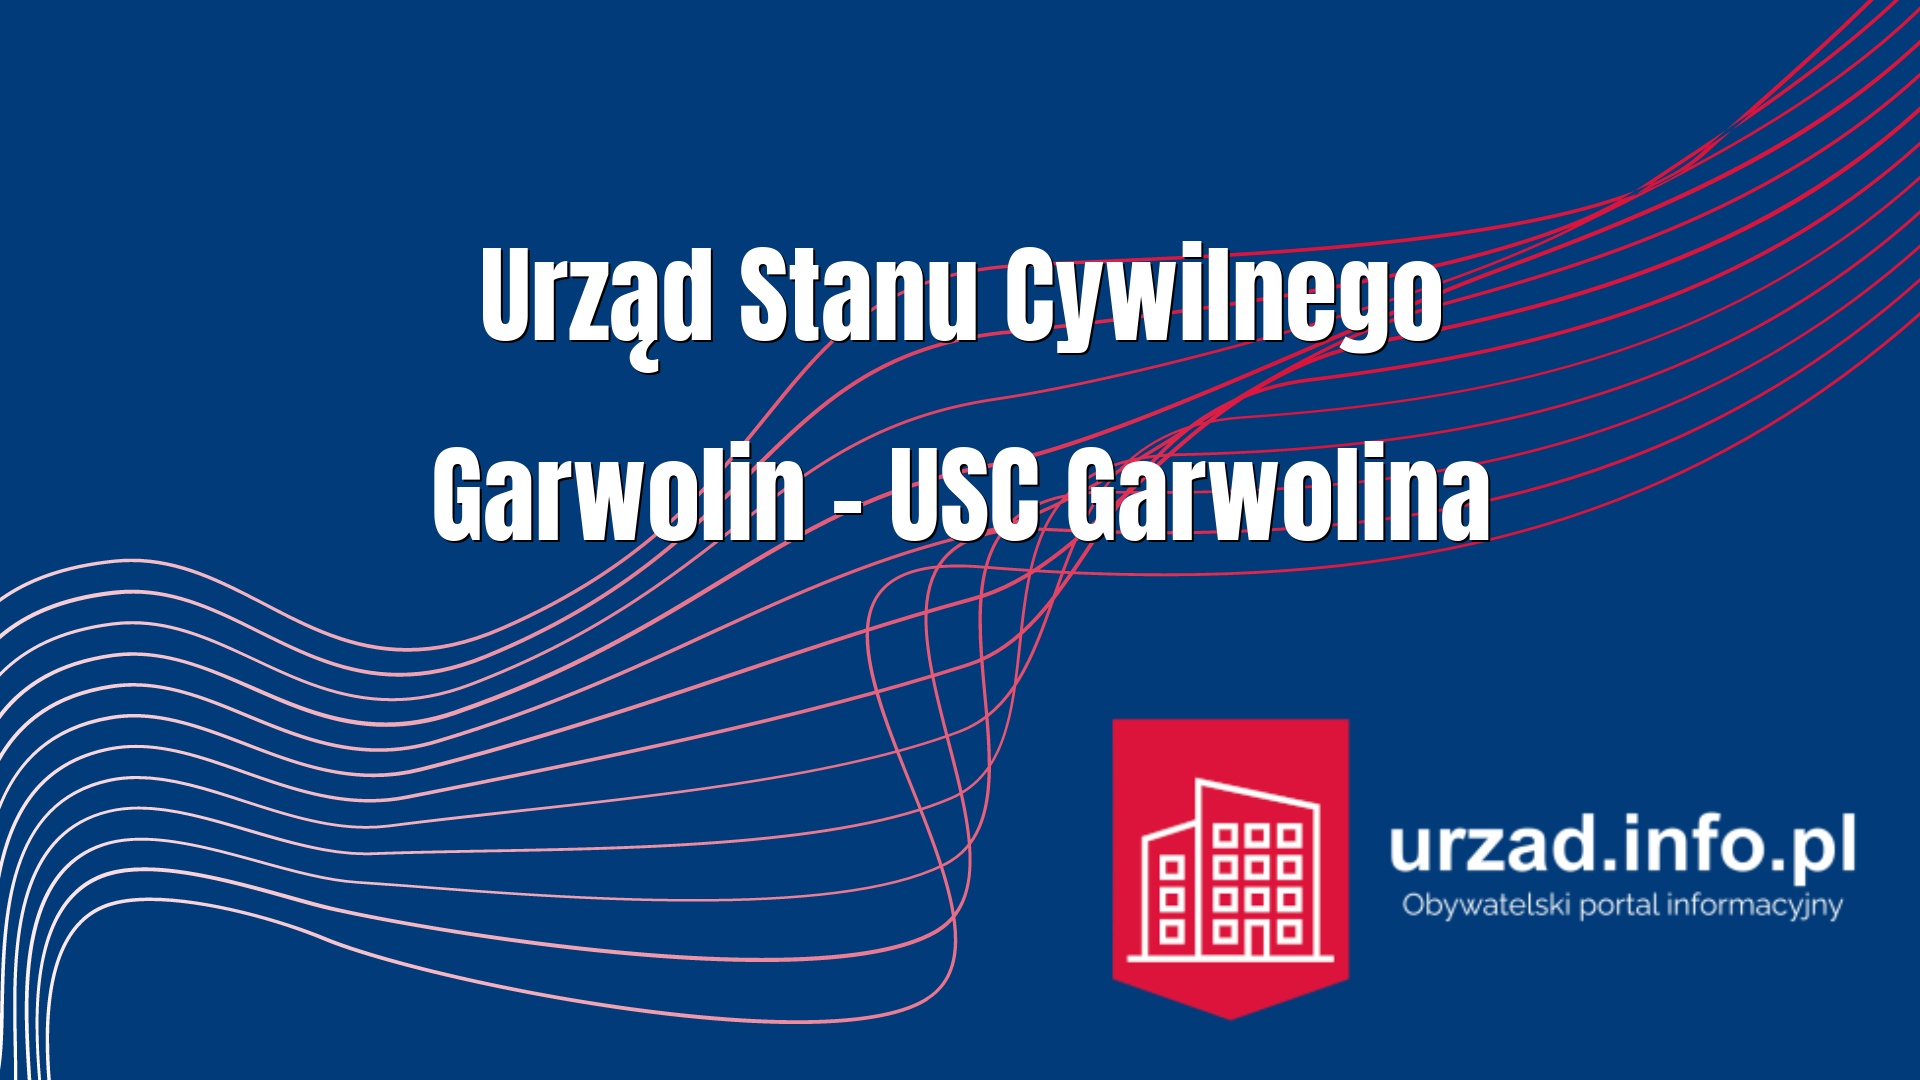 Urząd Stanu Cywilnego Garwolin – USC Garwolina